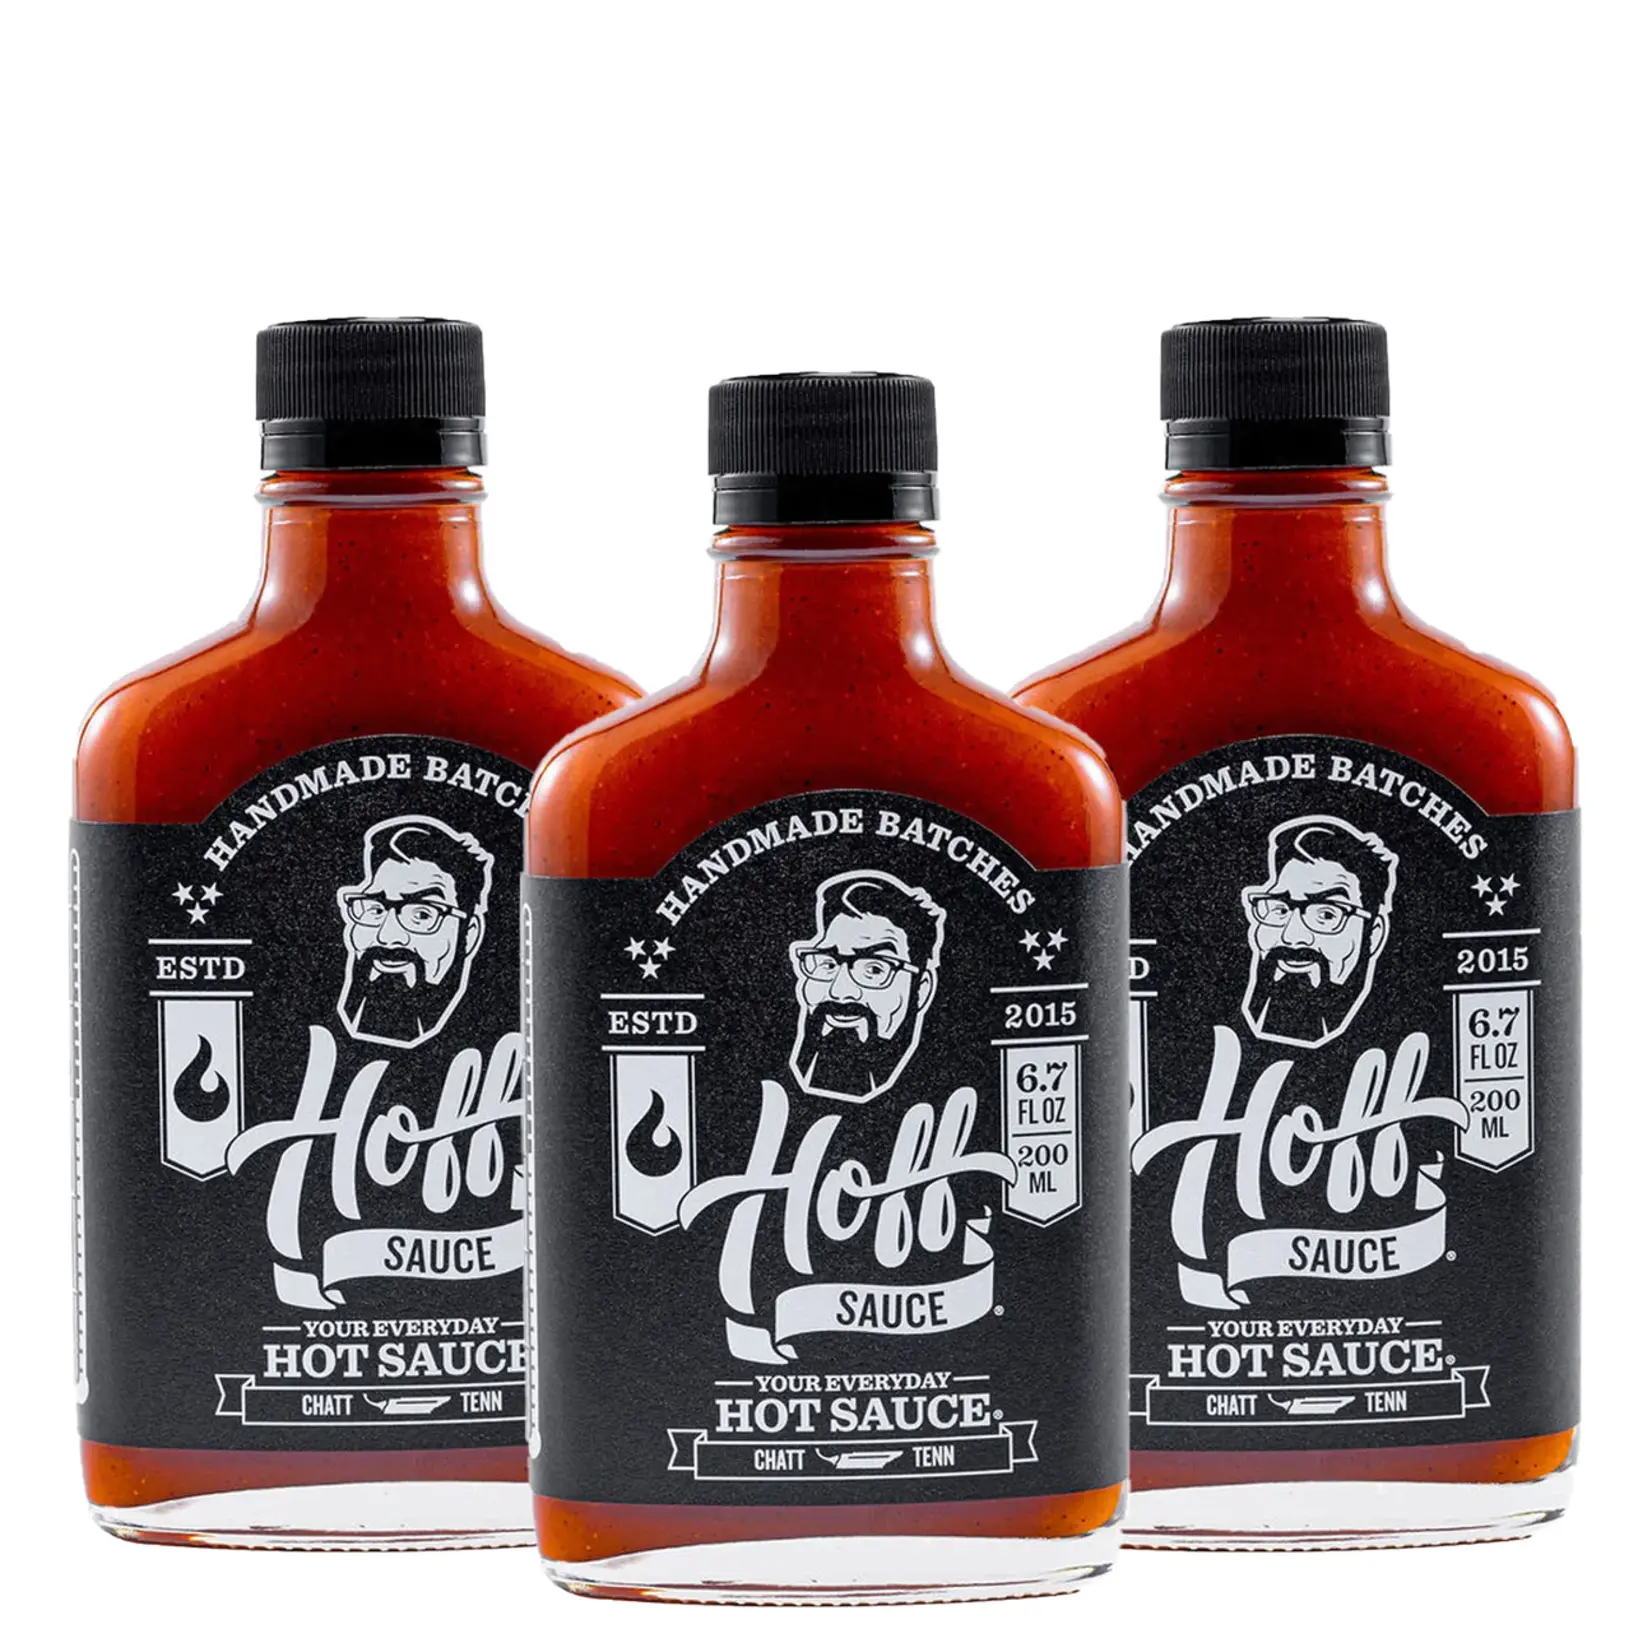 Hoff's Sauce Original Hot Sauce